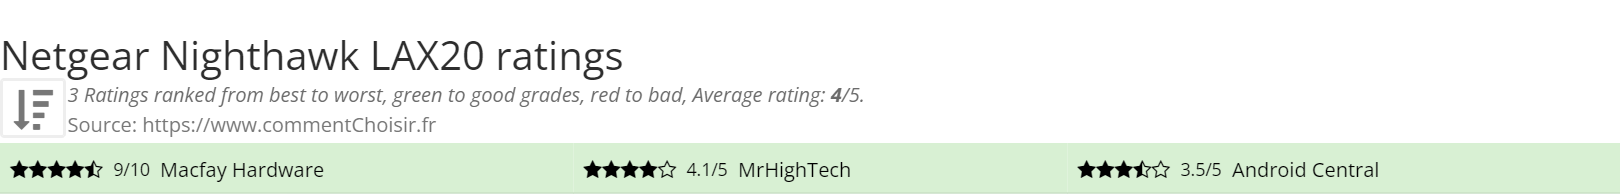 Ratings Netgear Nighthawk LAX20